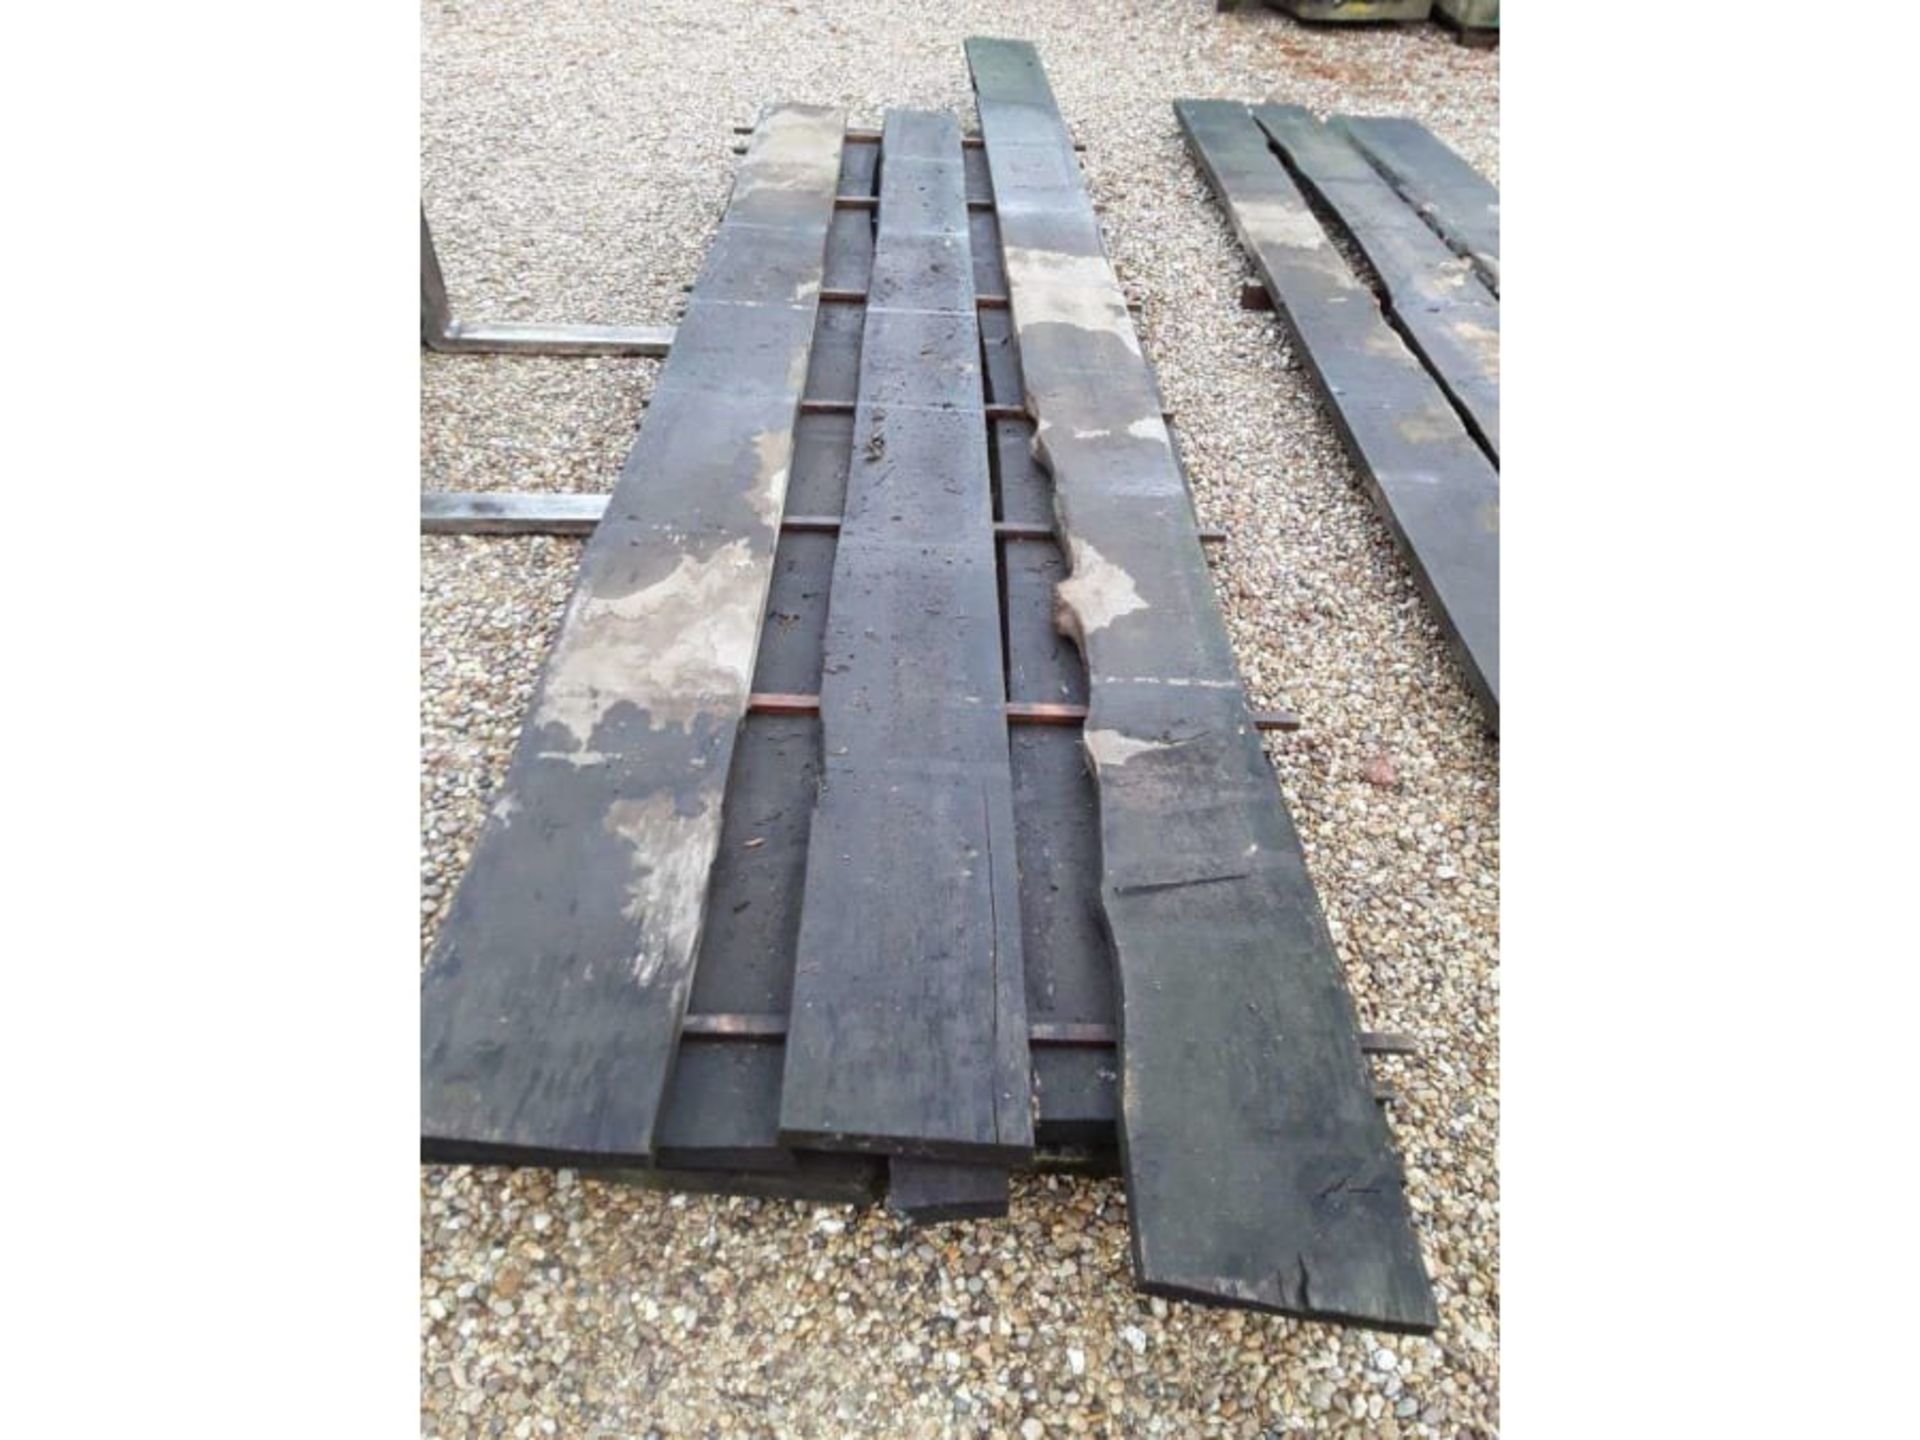 12 x Hardwood Air Dried Sawn Waney Edge / Live Edge English Oak Boards / Planks - Image 2 of 3